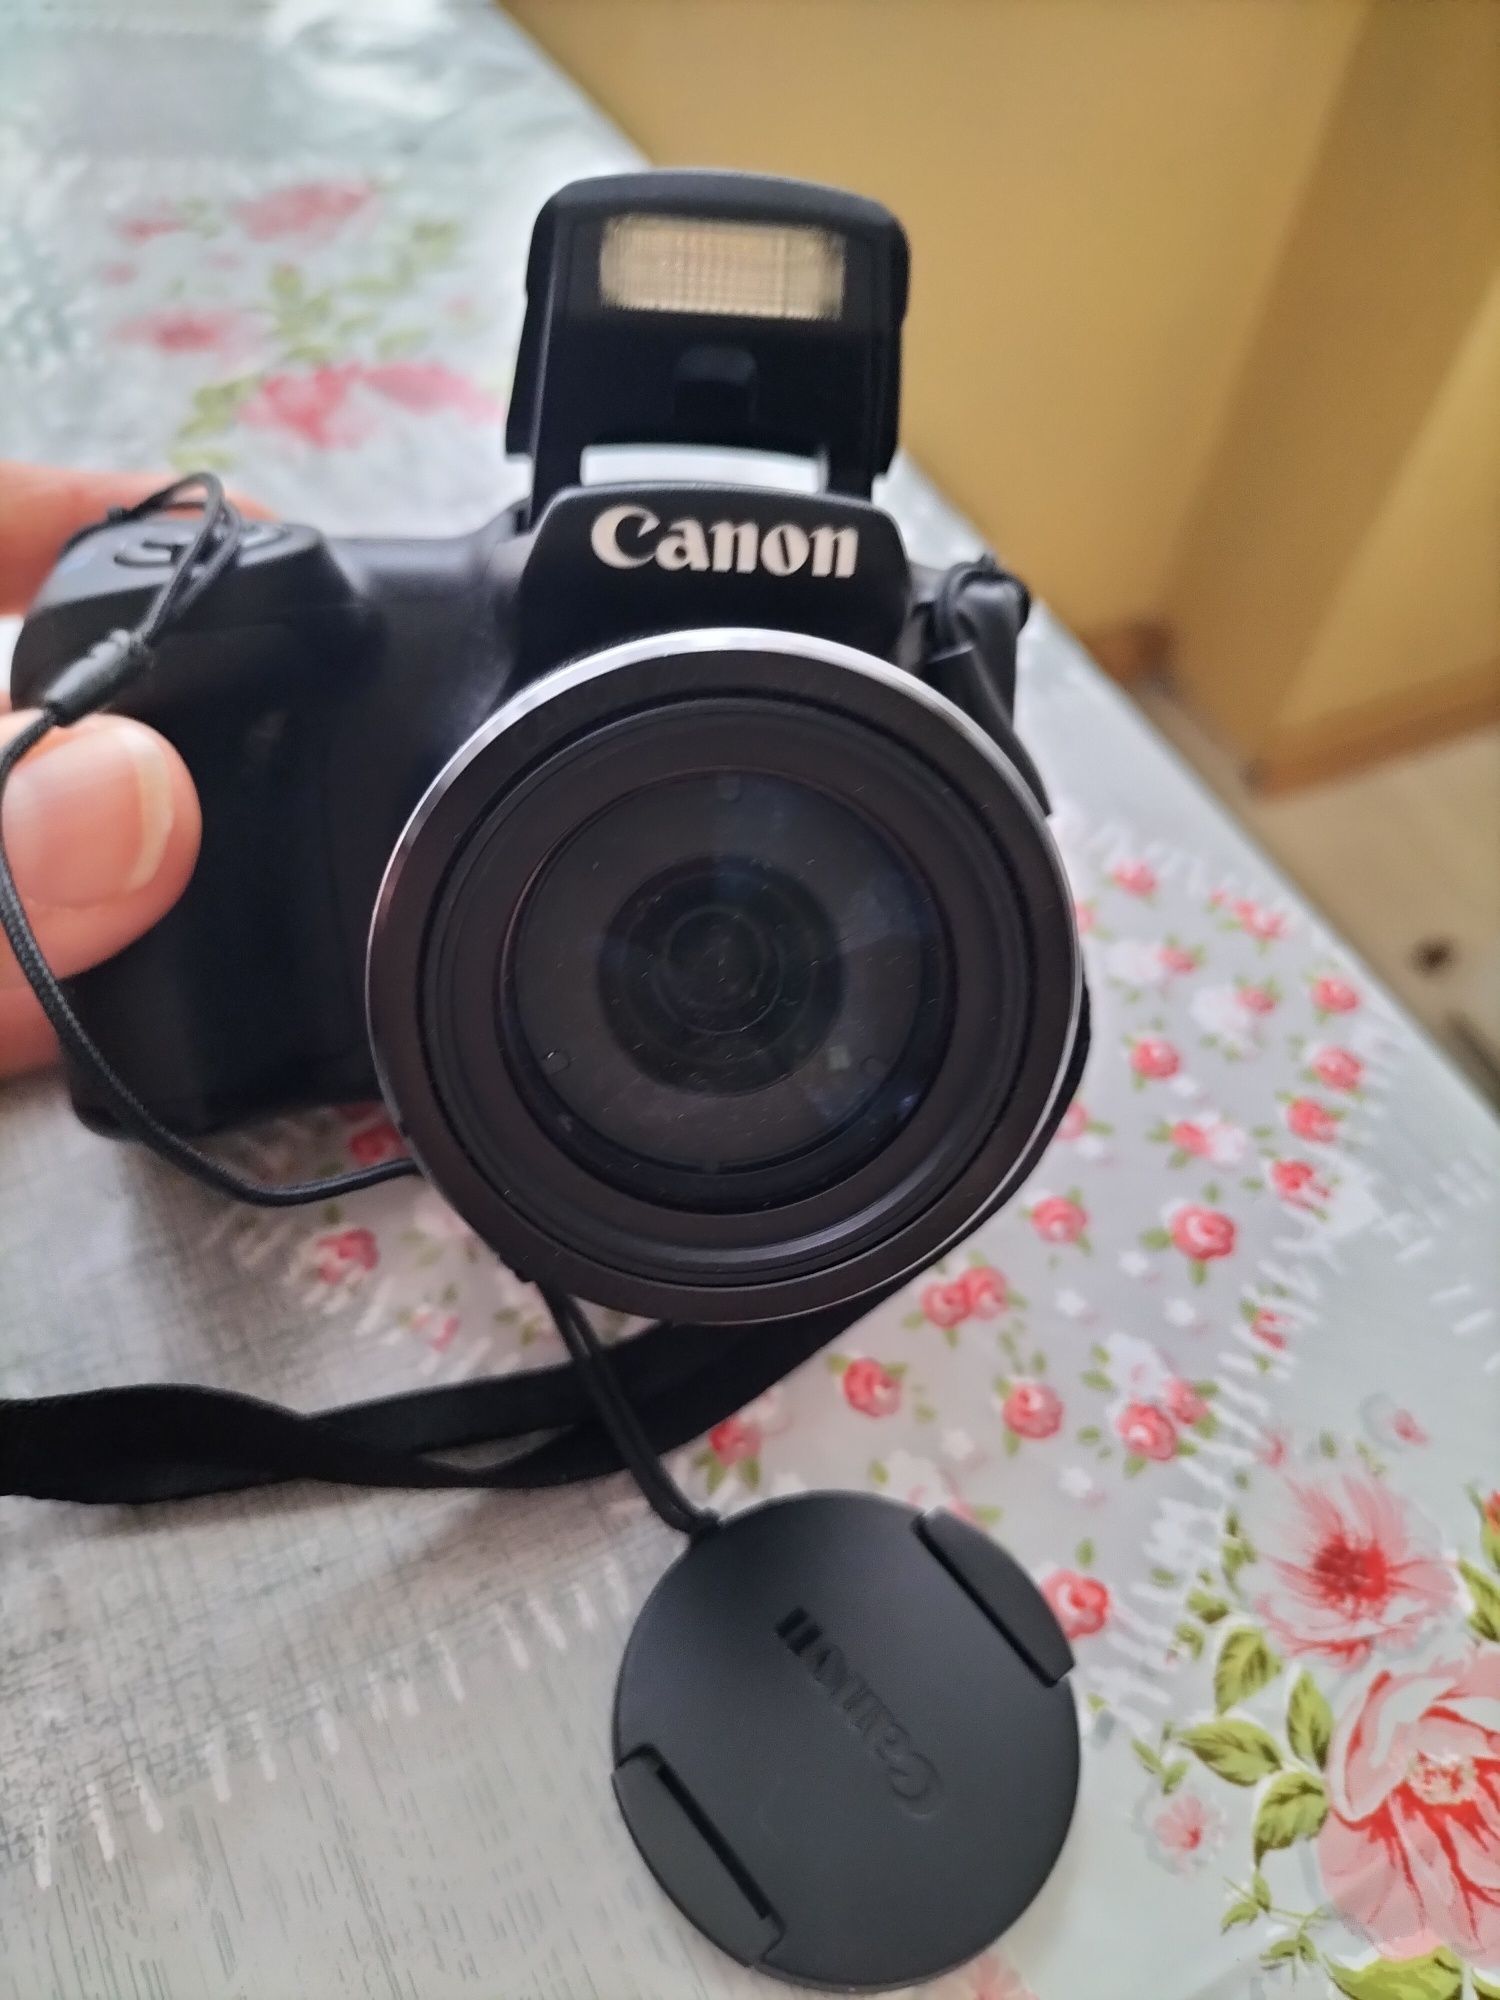 Aparat Canon SX400is